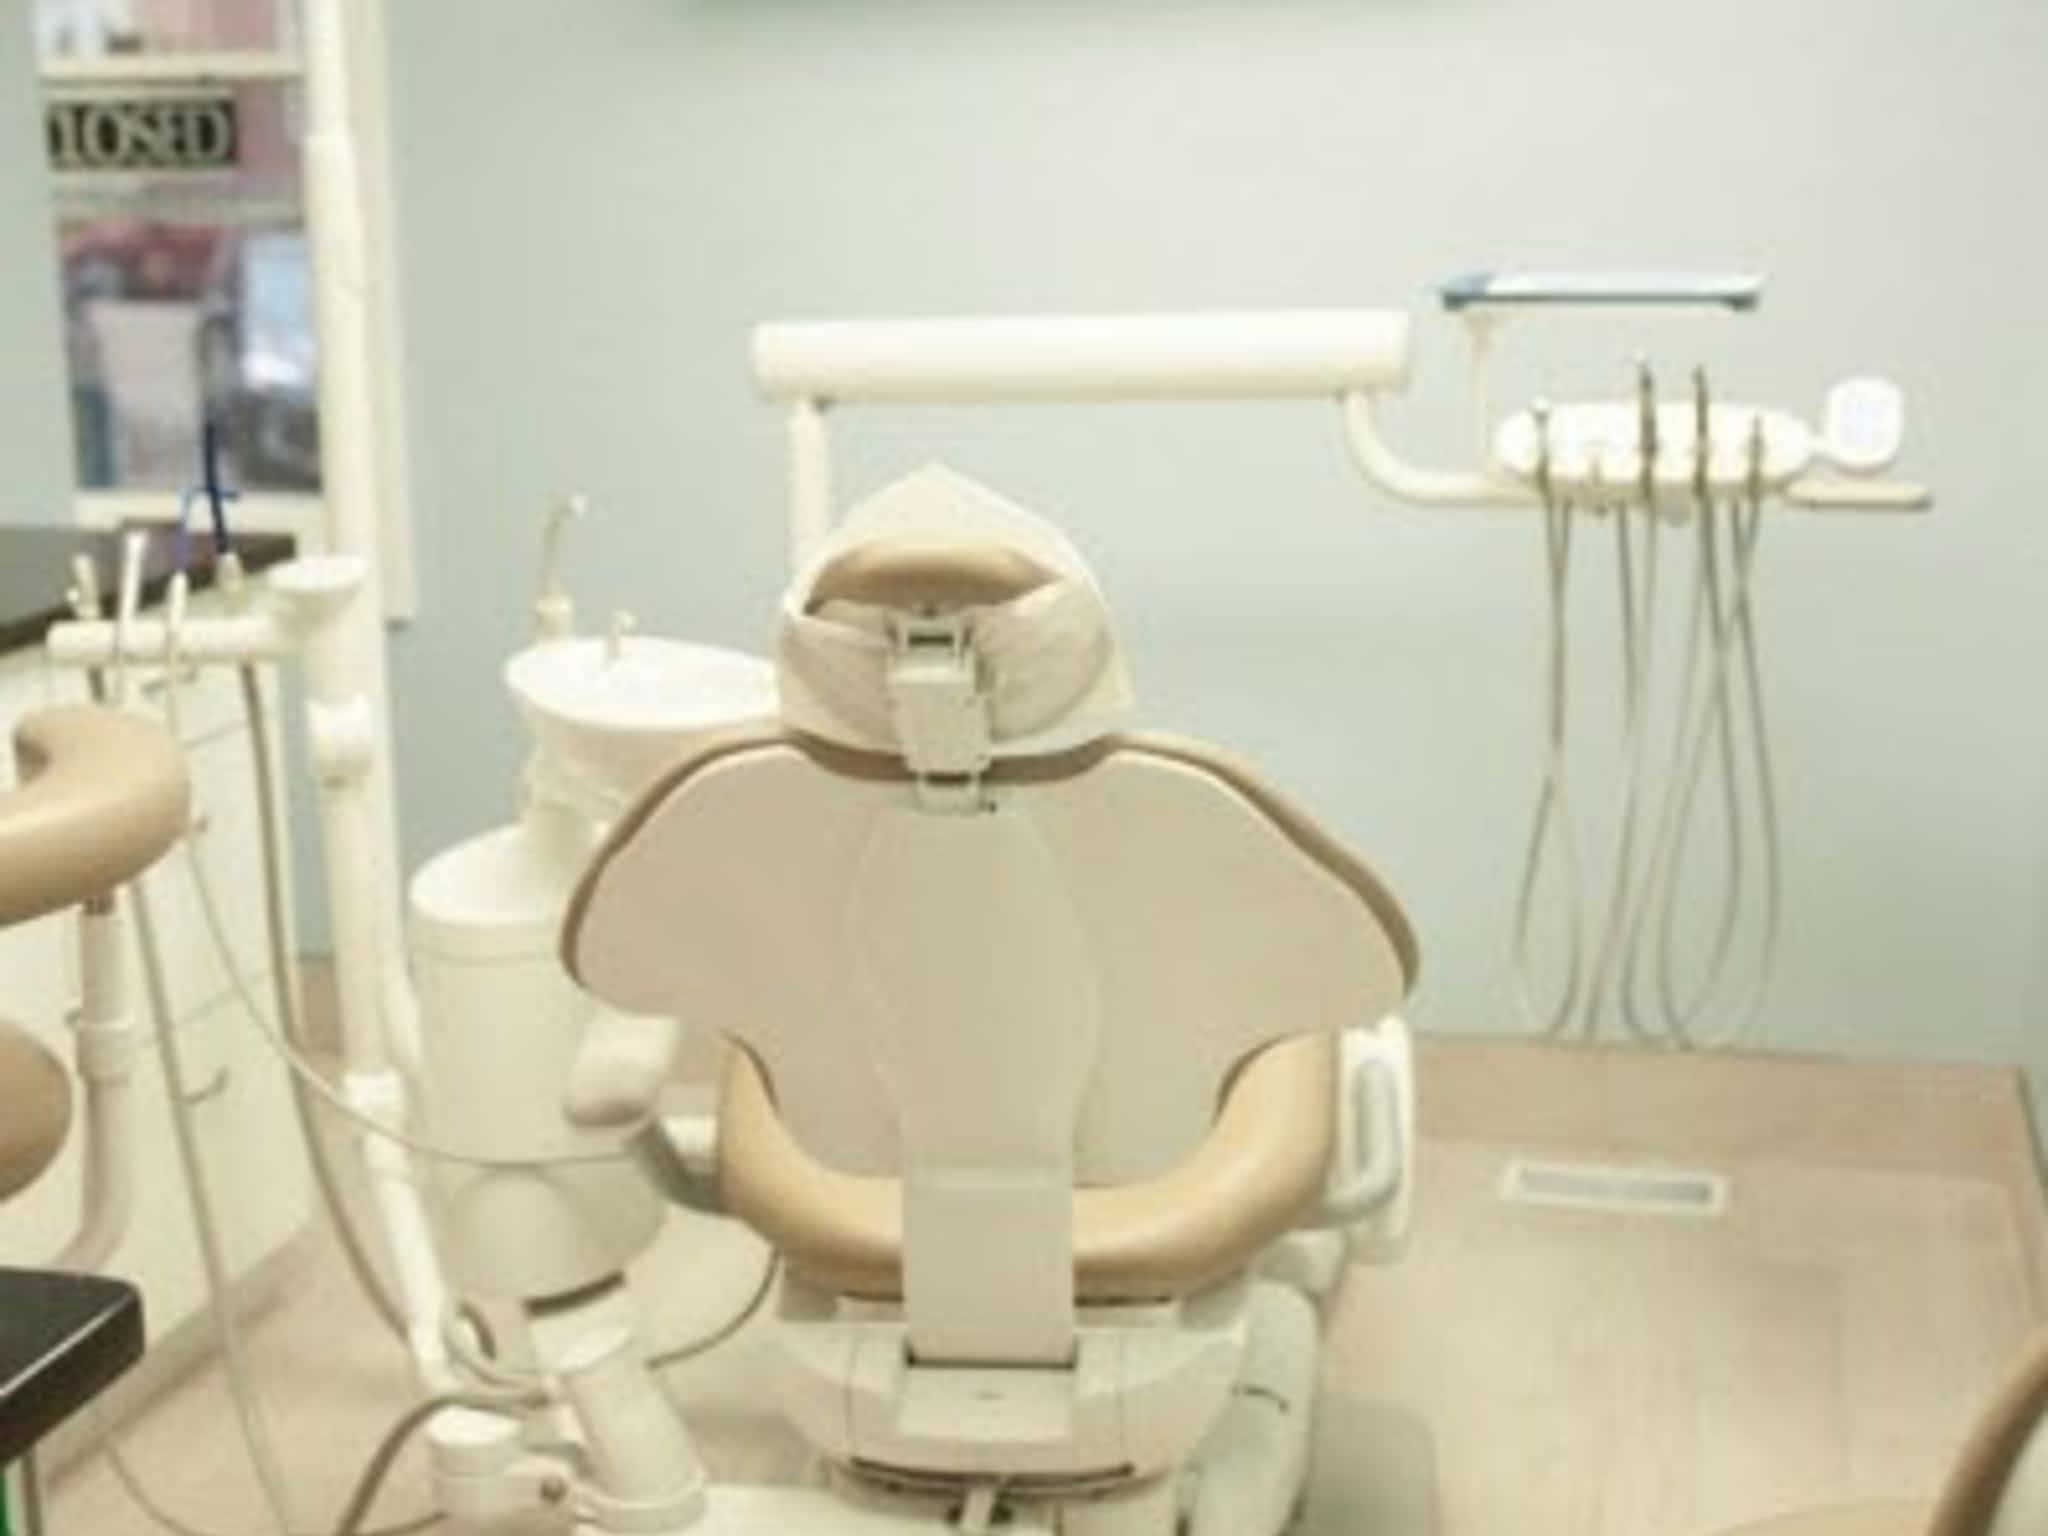 photo Ridge Smile Dental Clinic